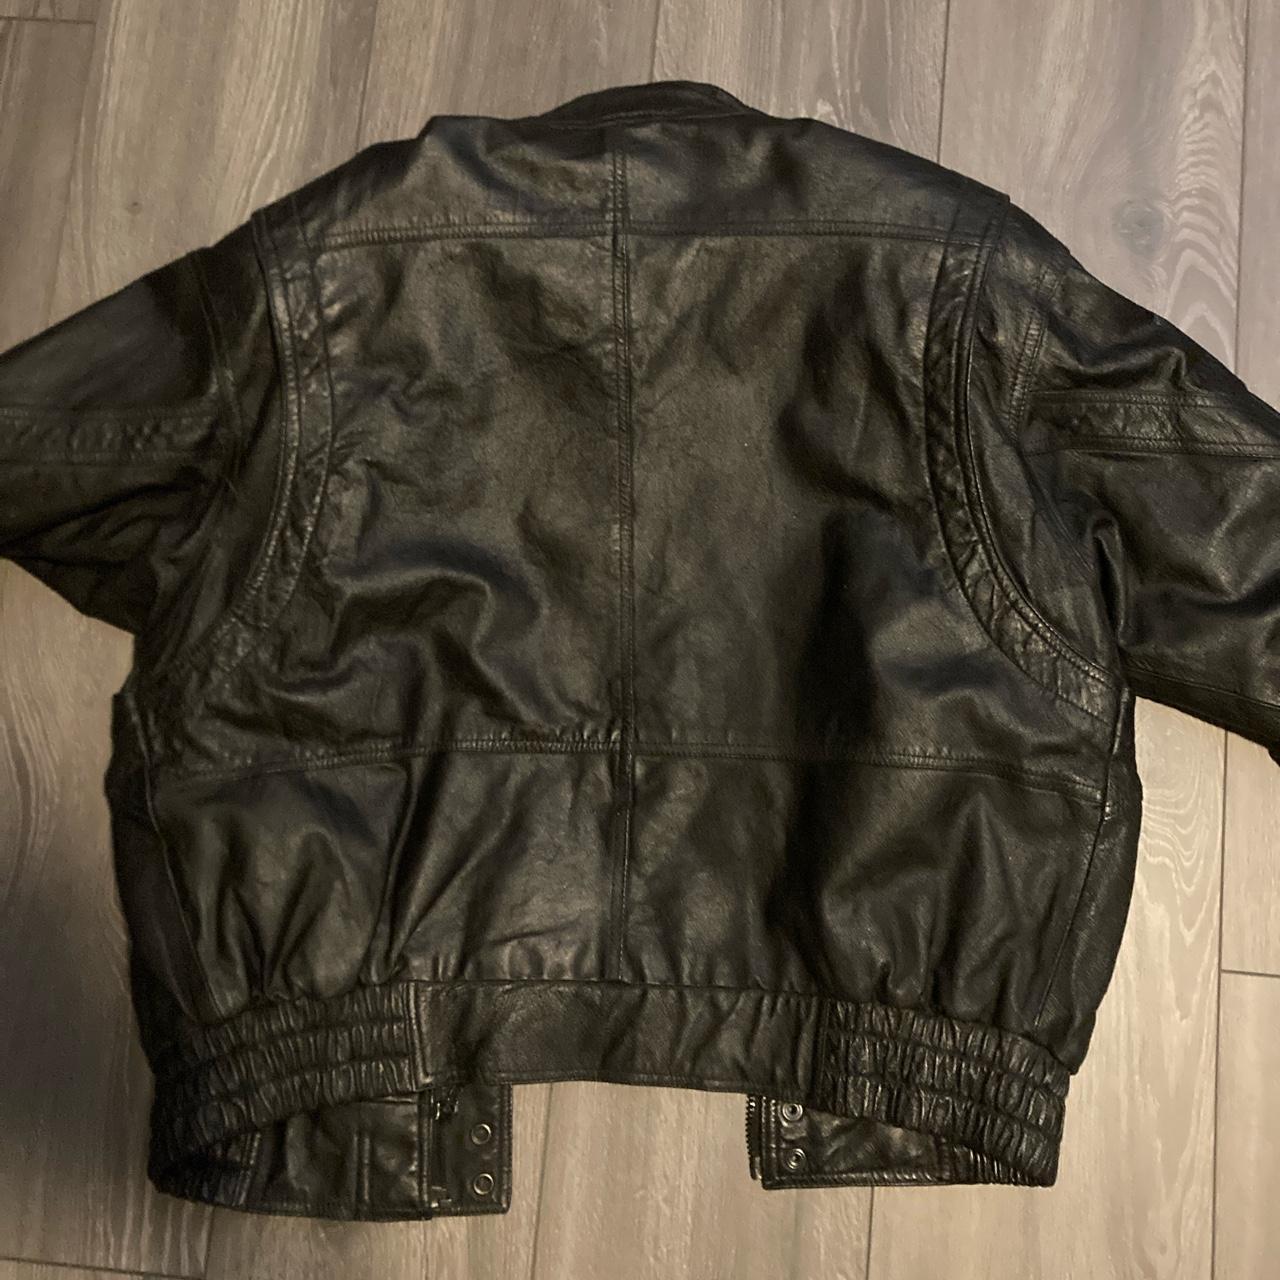 Insane vintage leather jacket(Cosa Nova) Size... - Depop